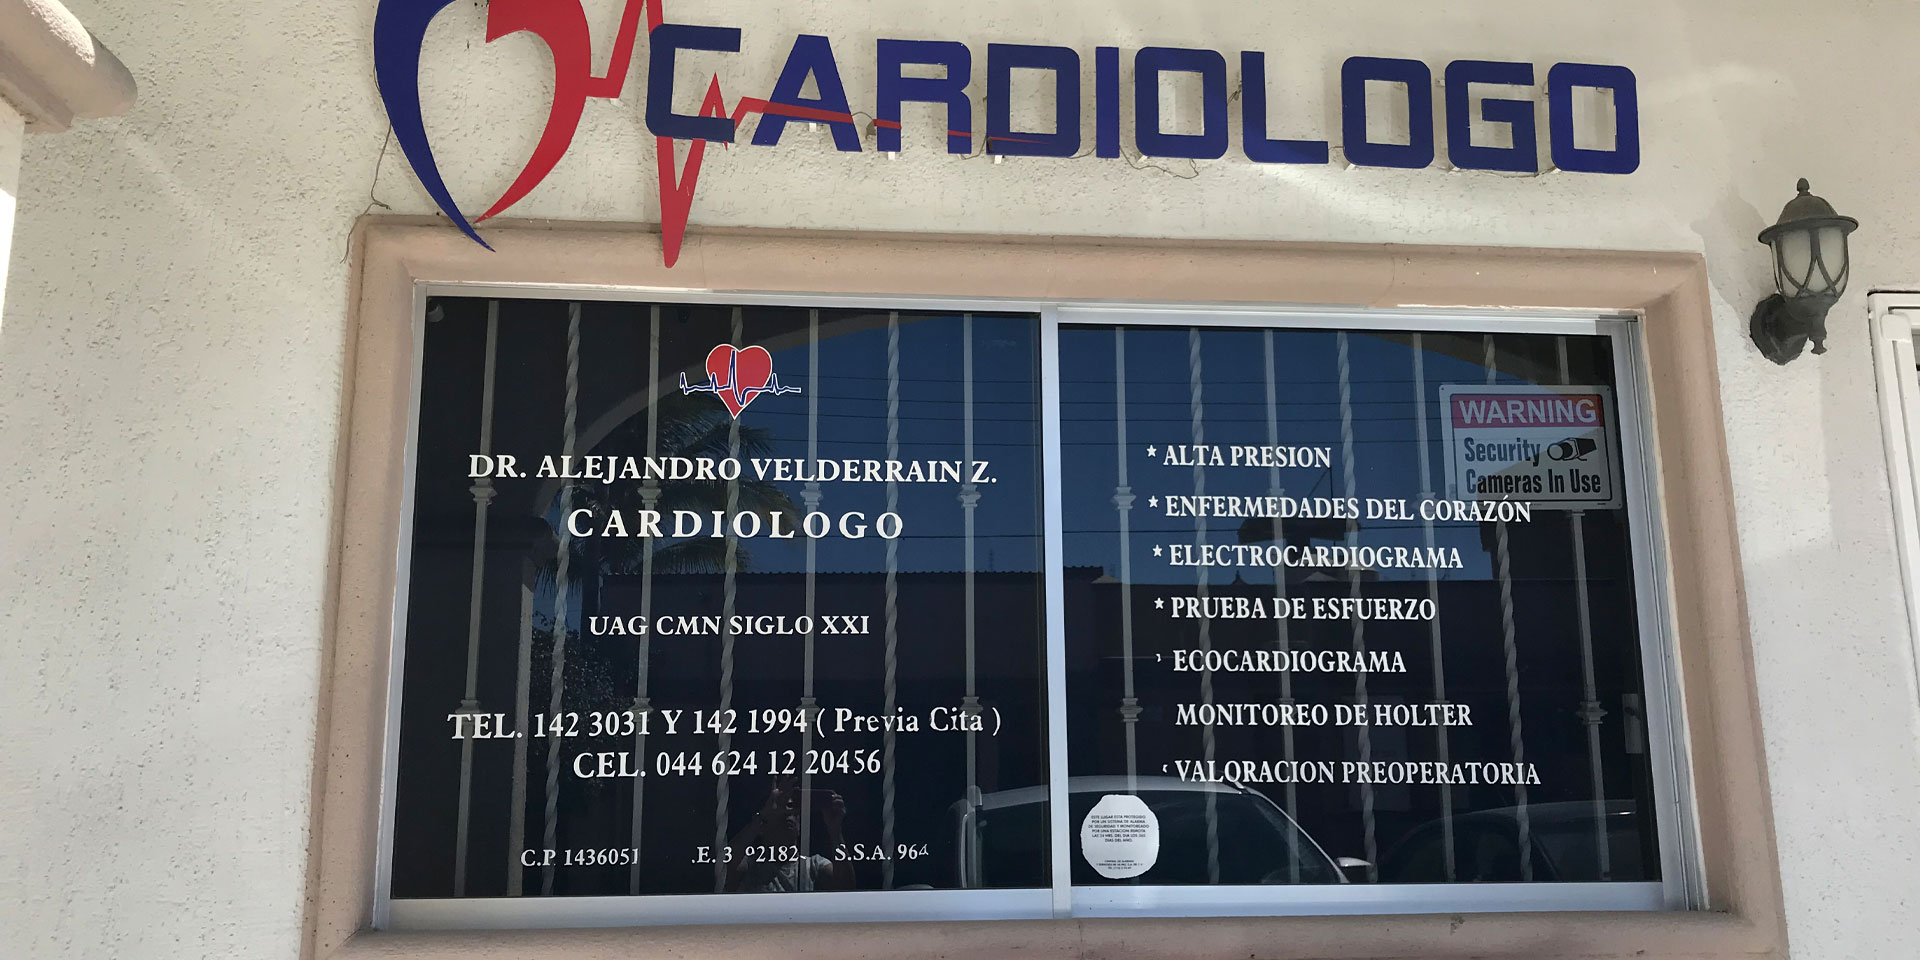 Dr. Valderrain Cardiologist